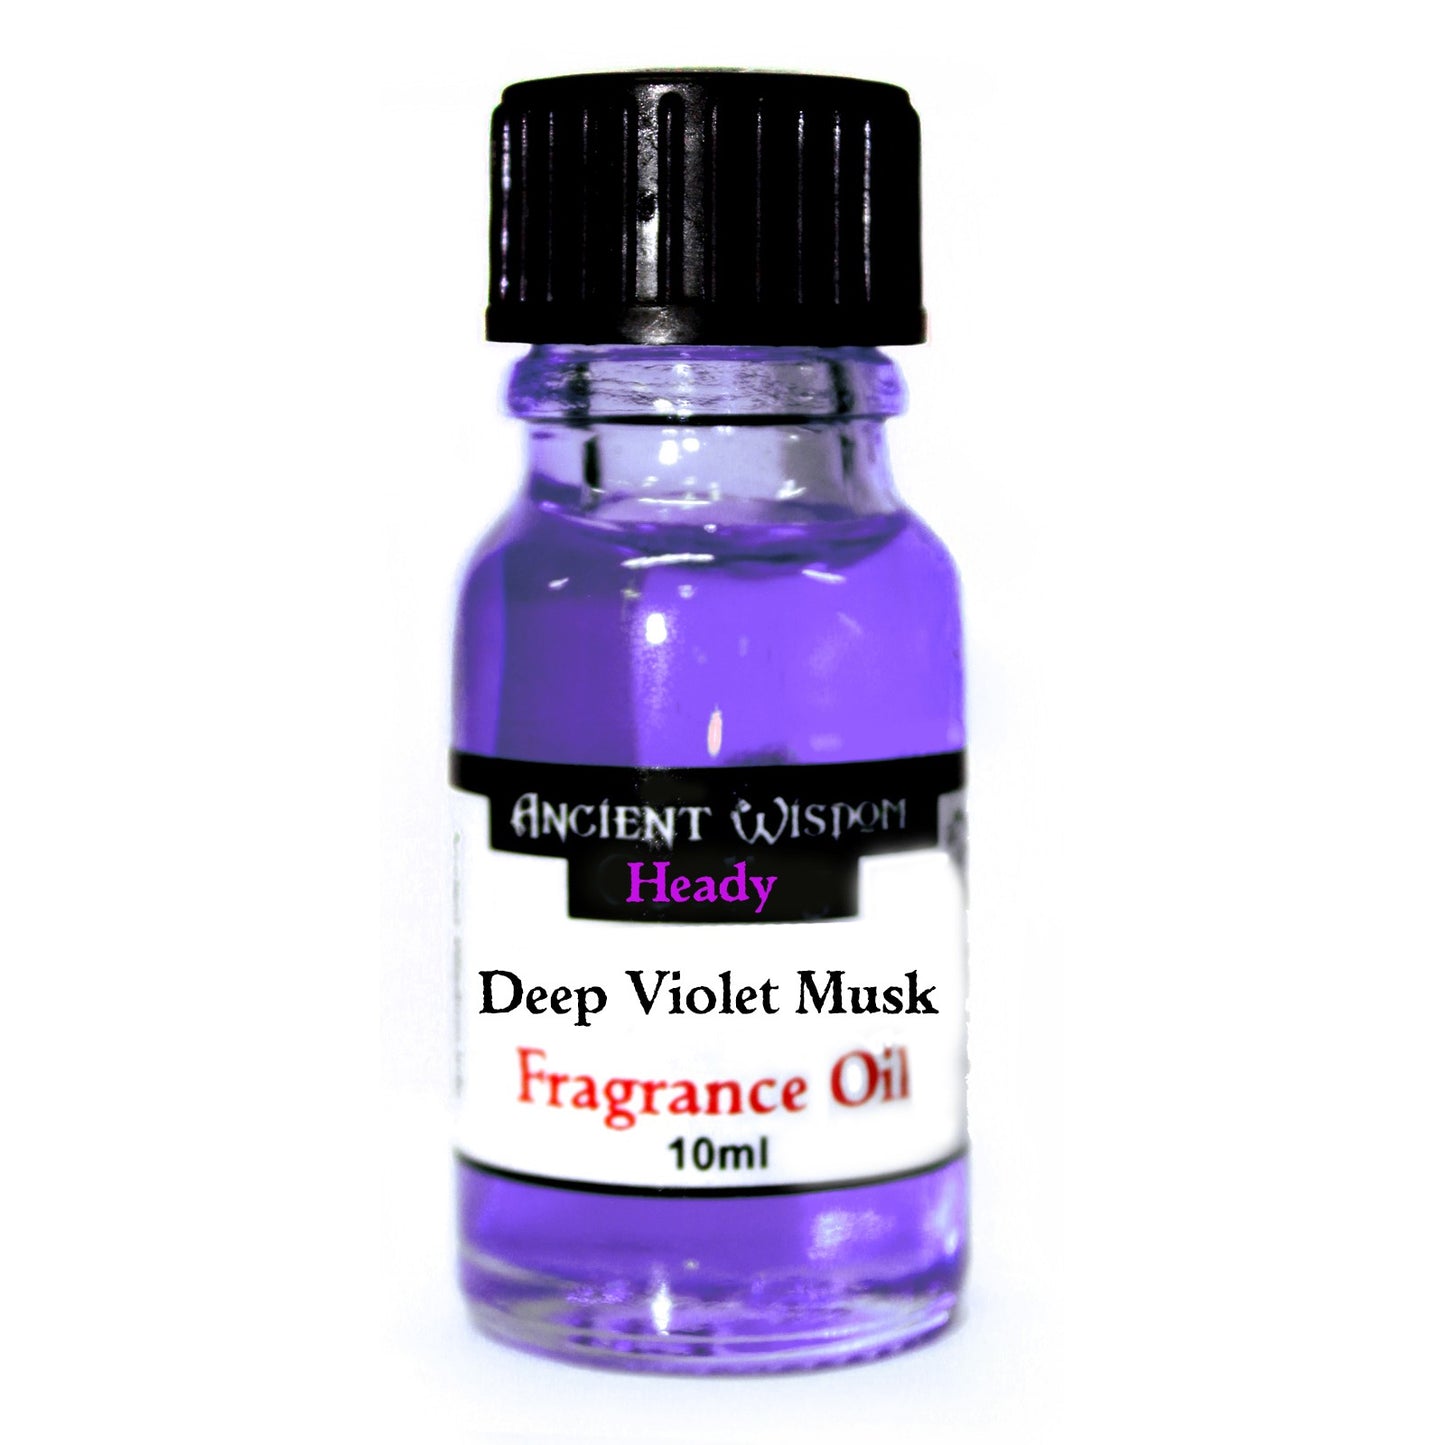 10ml Deep Violet Musk Fragrance Oil